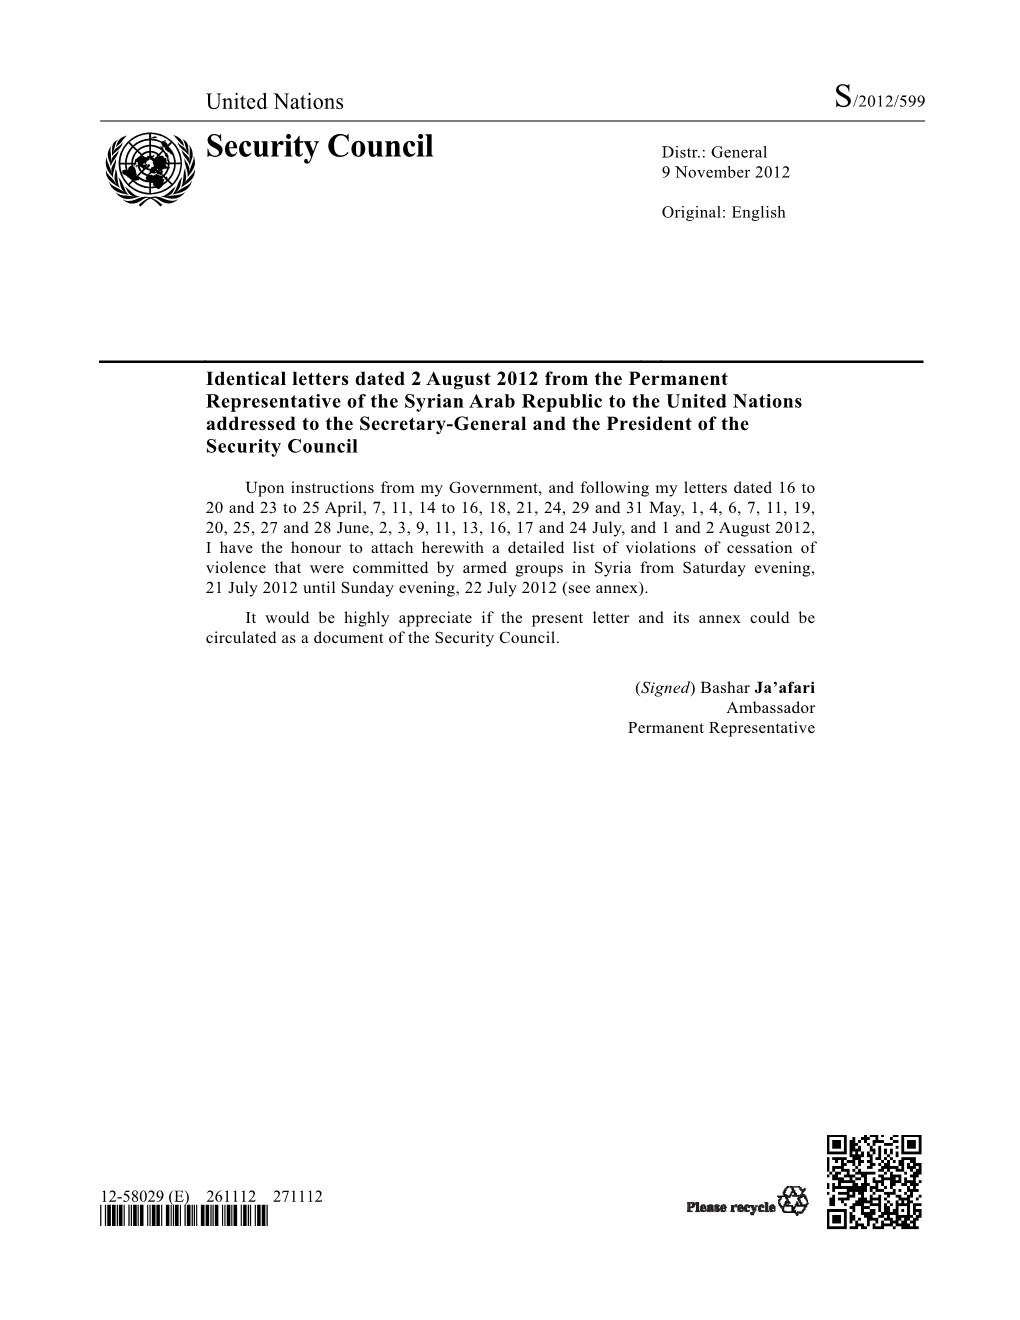 Security Council Distr.: General 9 November 2012